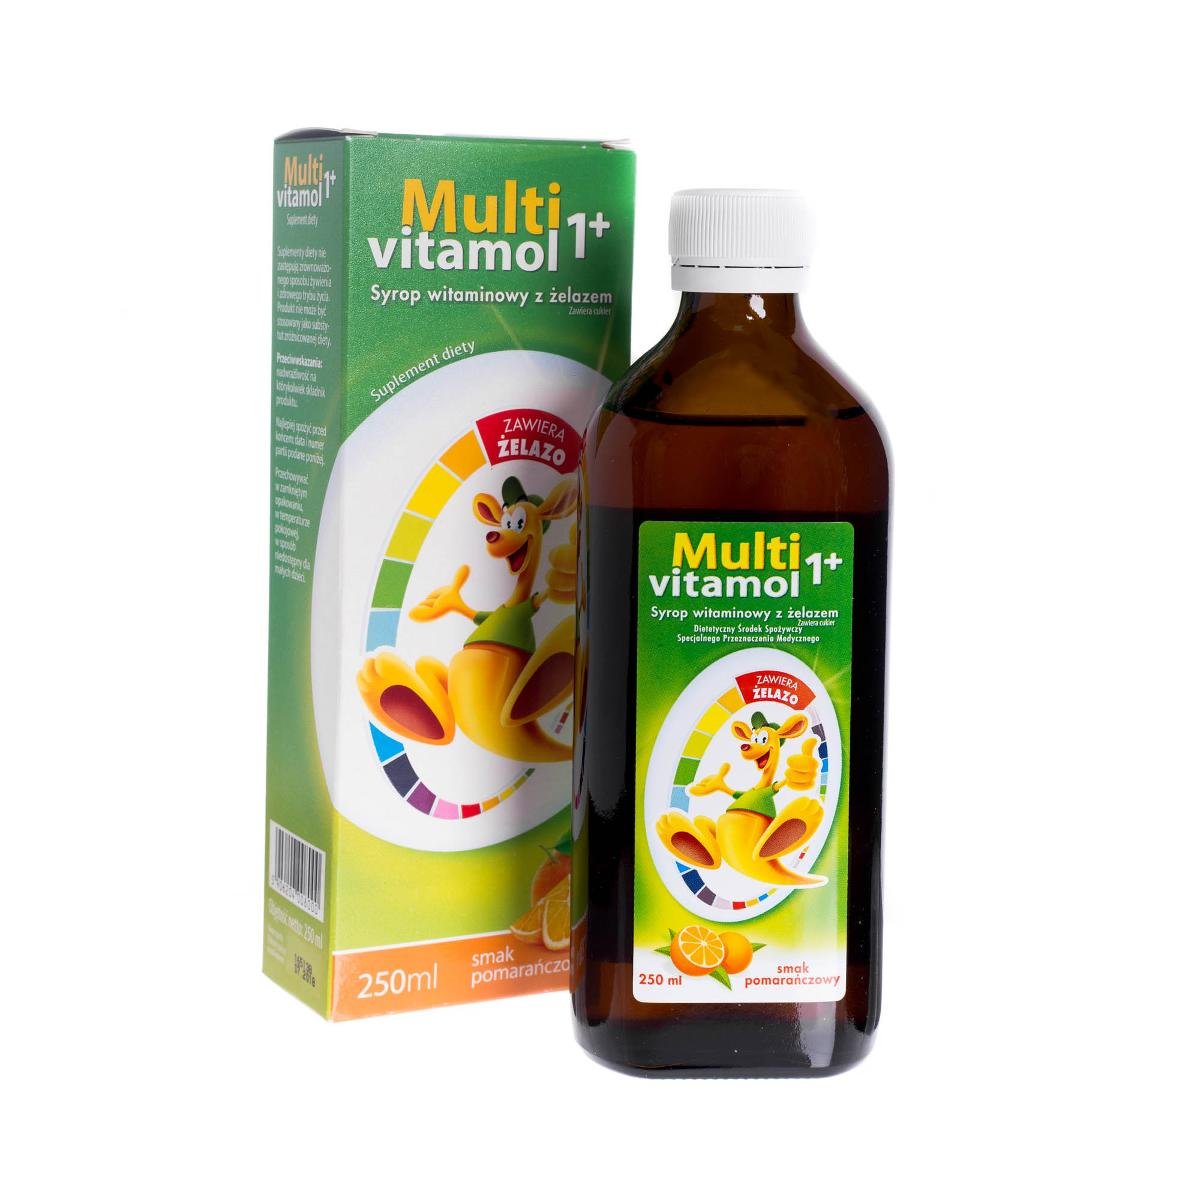 Фото - Вітаміни й мінерали Natur Produkt Multivitamol 1+ Syrop witaminowy z żelazem, suplement diety, smak pomarańc 